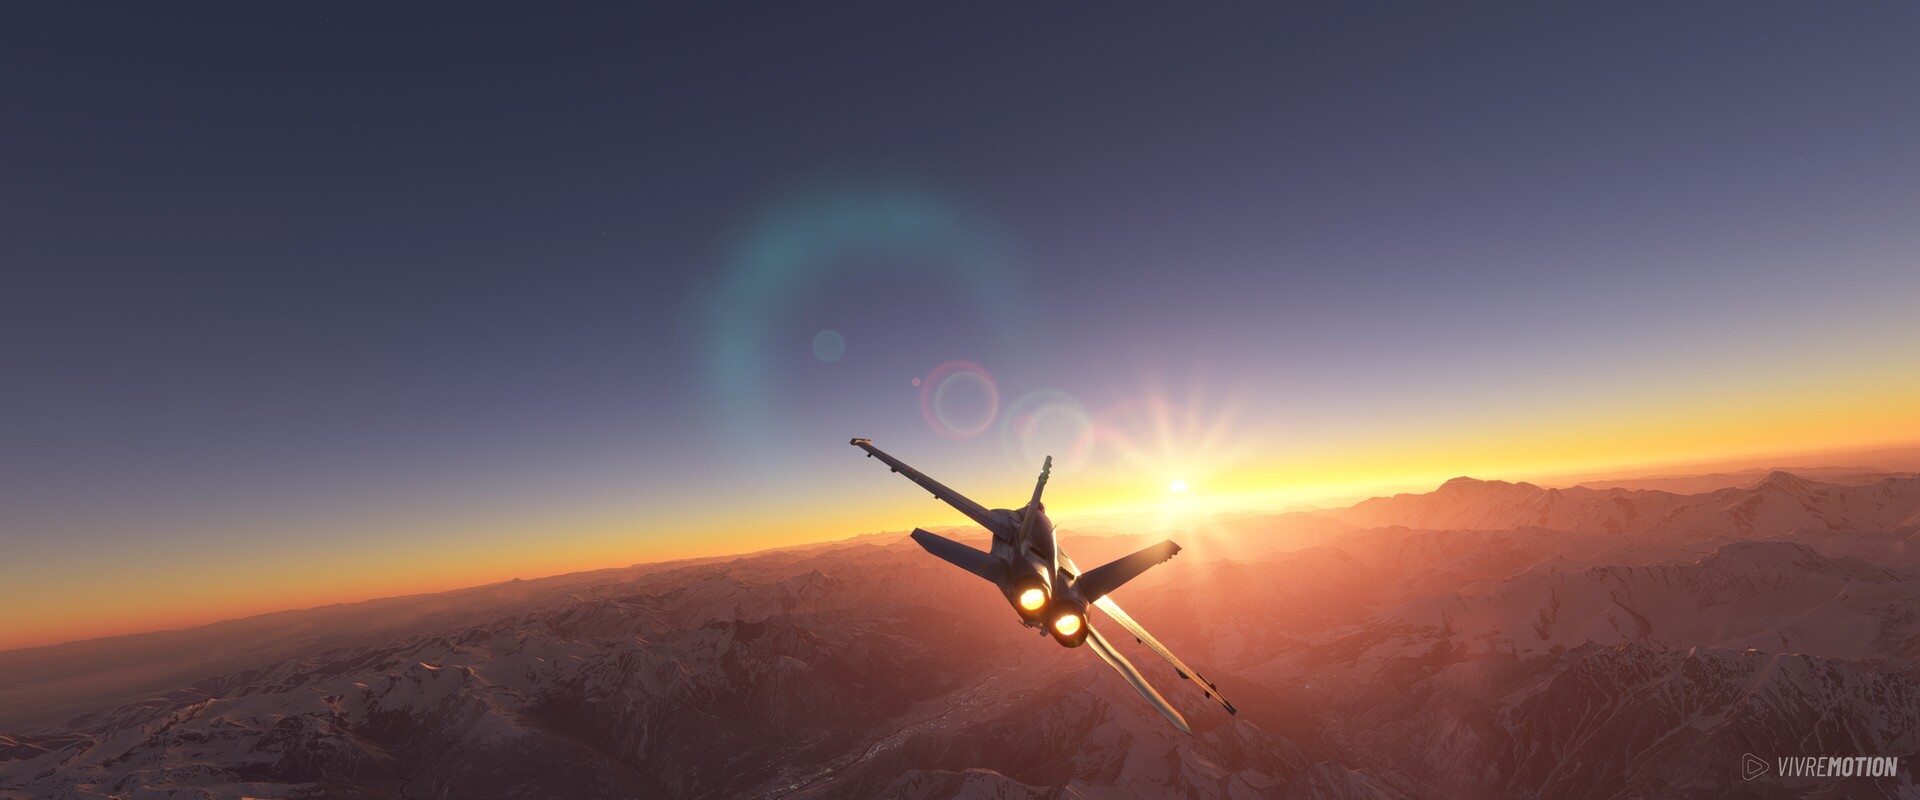 Mountains, Switzerland - Boeing F/A-18 Super Hornet - Microsoft Flight Simulator - VIVRE-MOTION